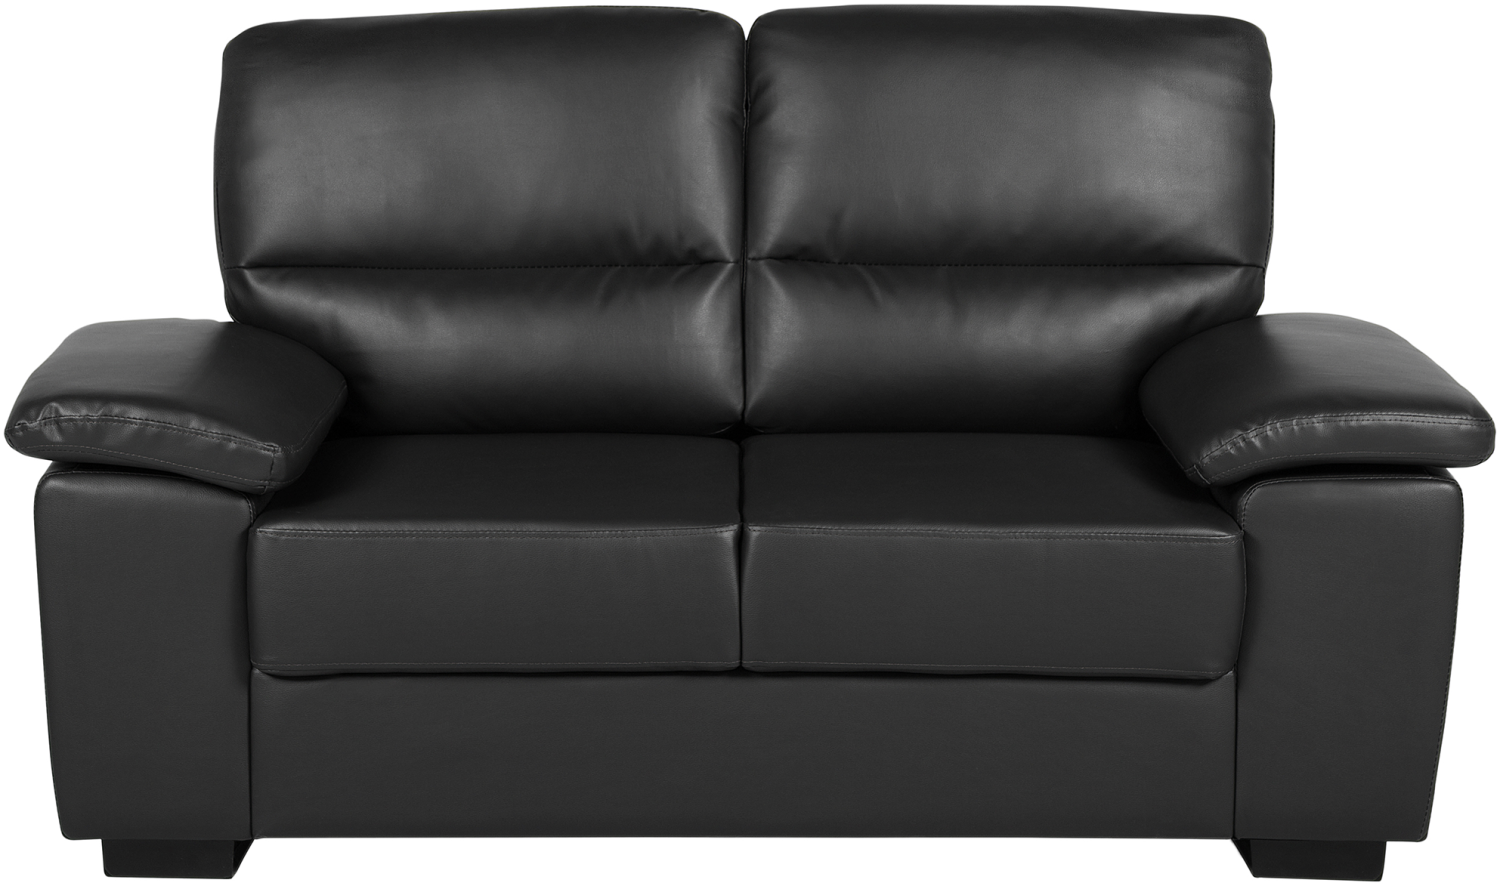 2-Sitzer Sofa Kunstleder schwarz VOGAR Bild 1